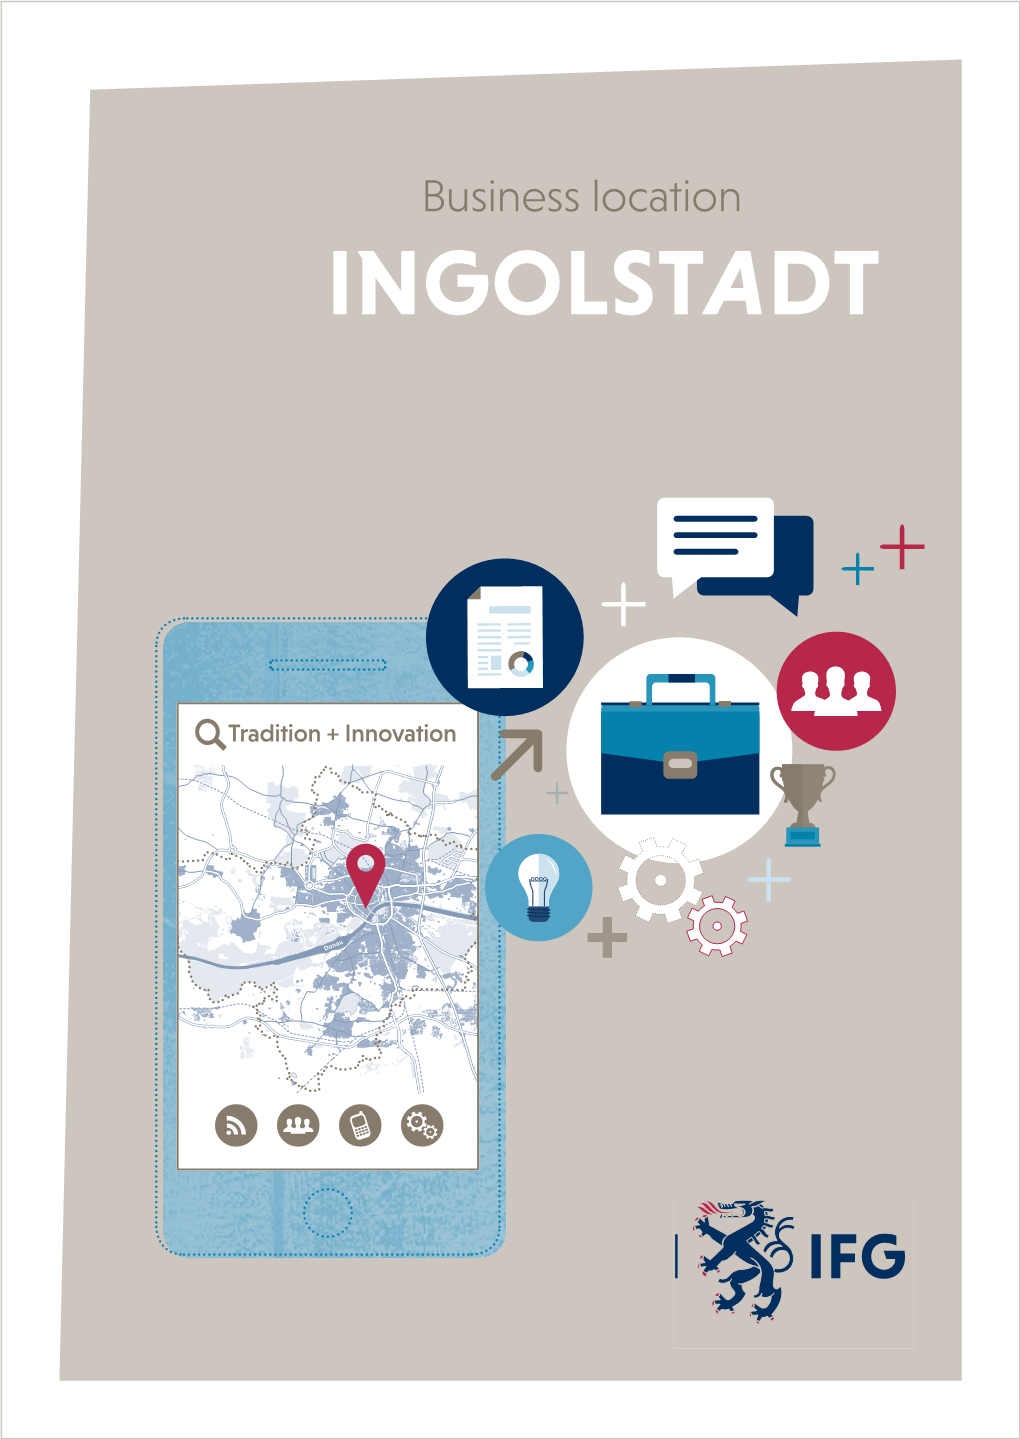 IFG Ingolstadt Economic Development